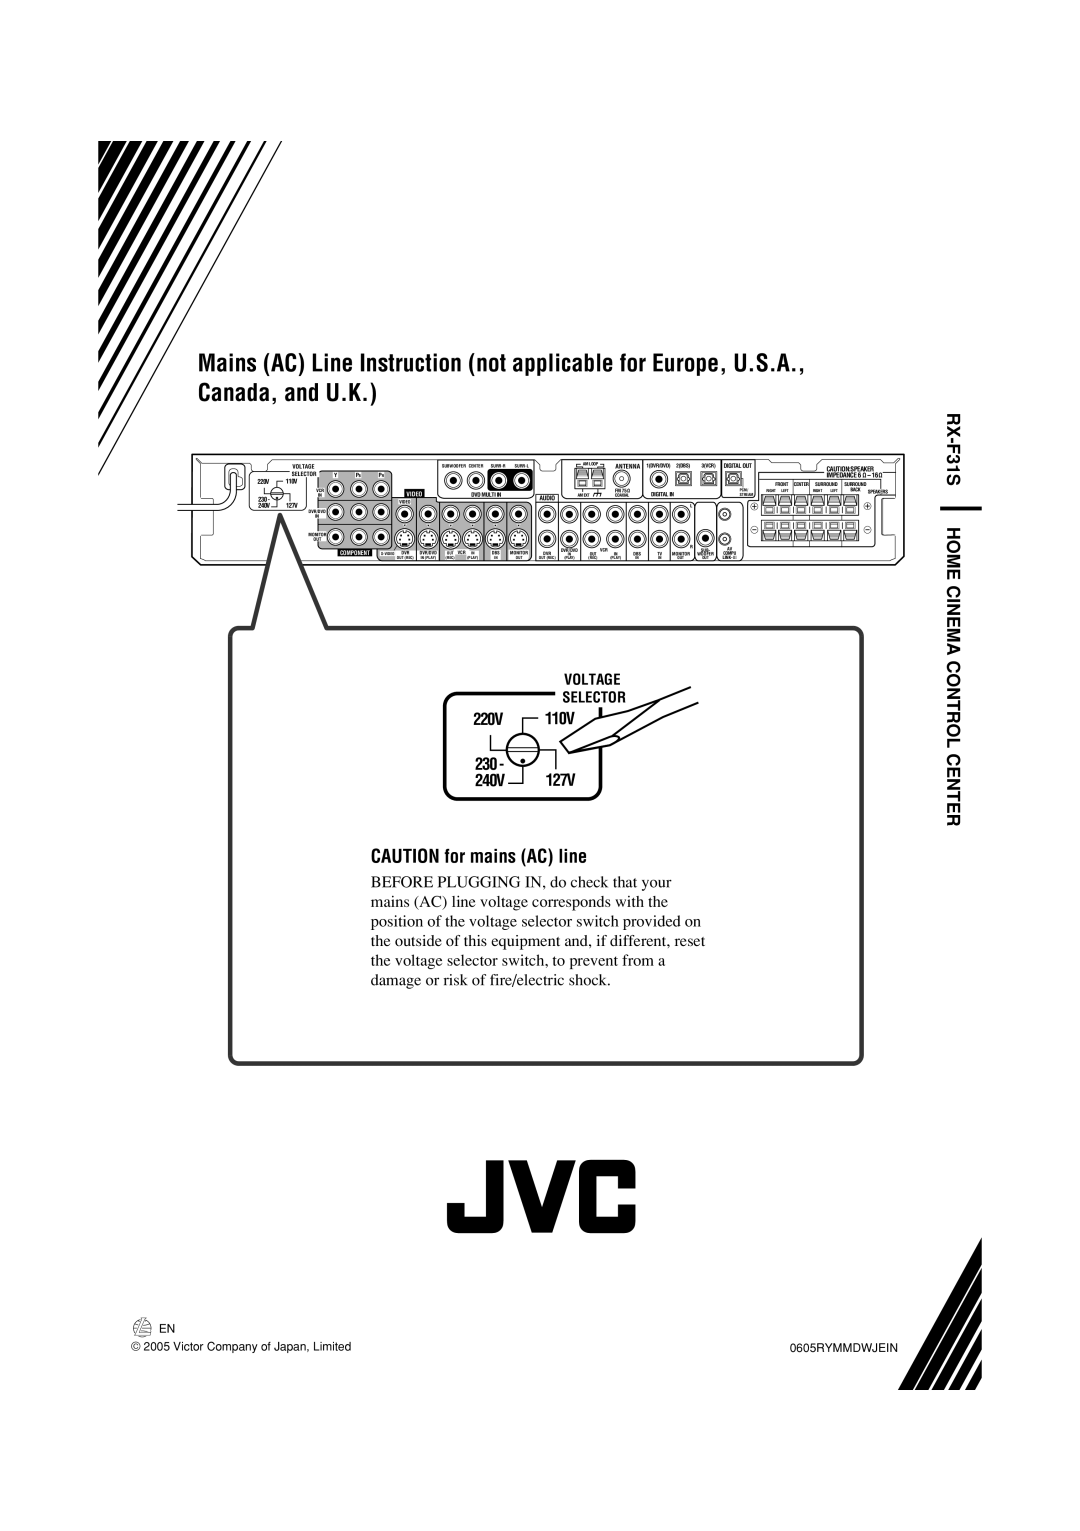 JVC manual RX-F31S HOME CINEMA CONTROL CENTER, 220V 230 240V, Voltage Selector, 110V, Video, Audio, 127V 